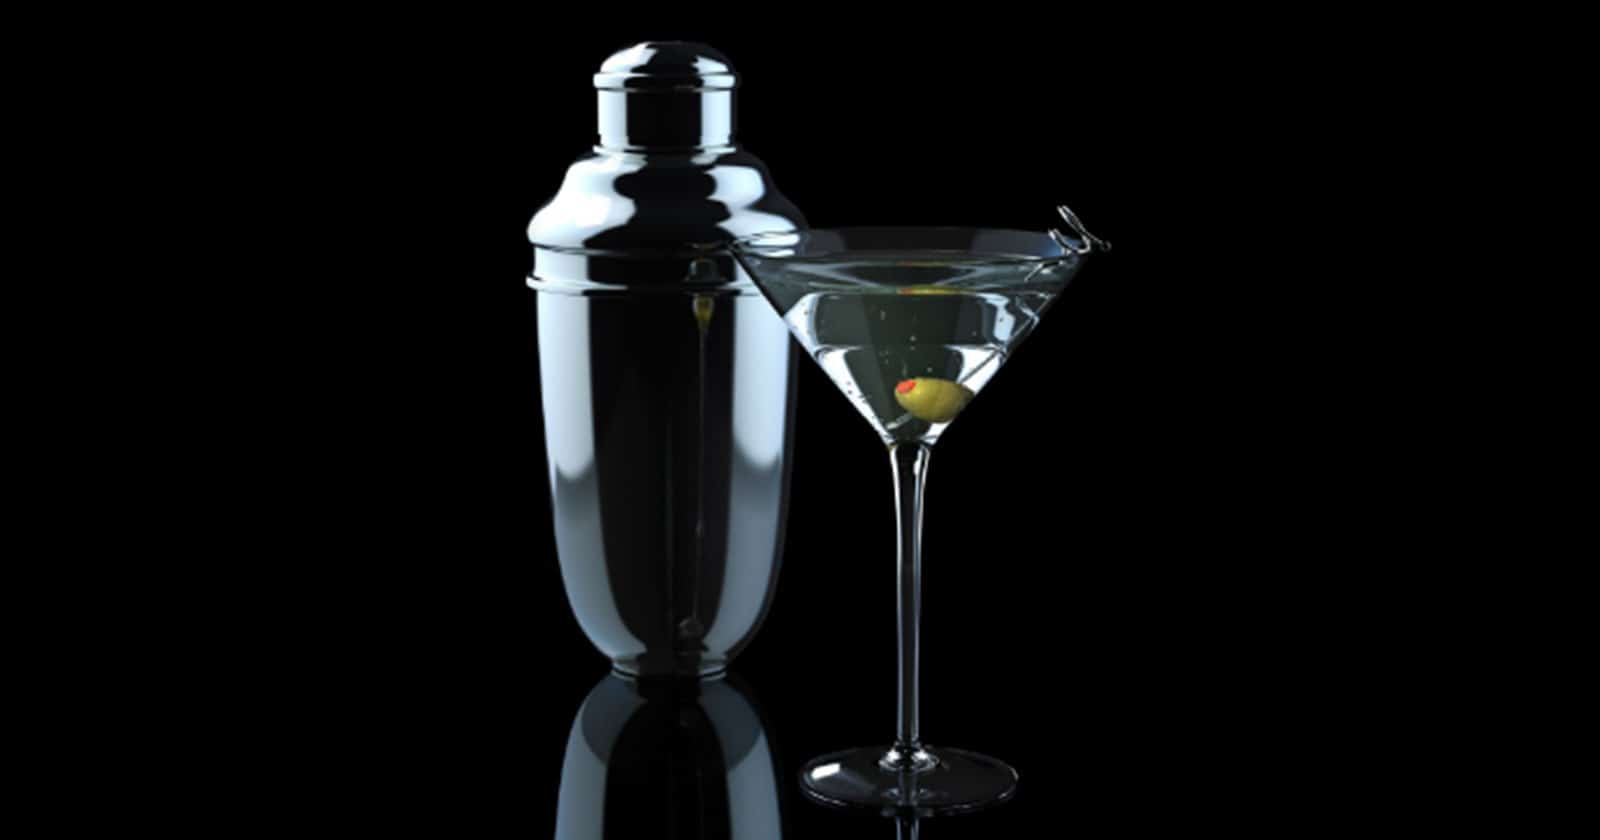 vodka-martini